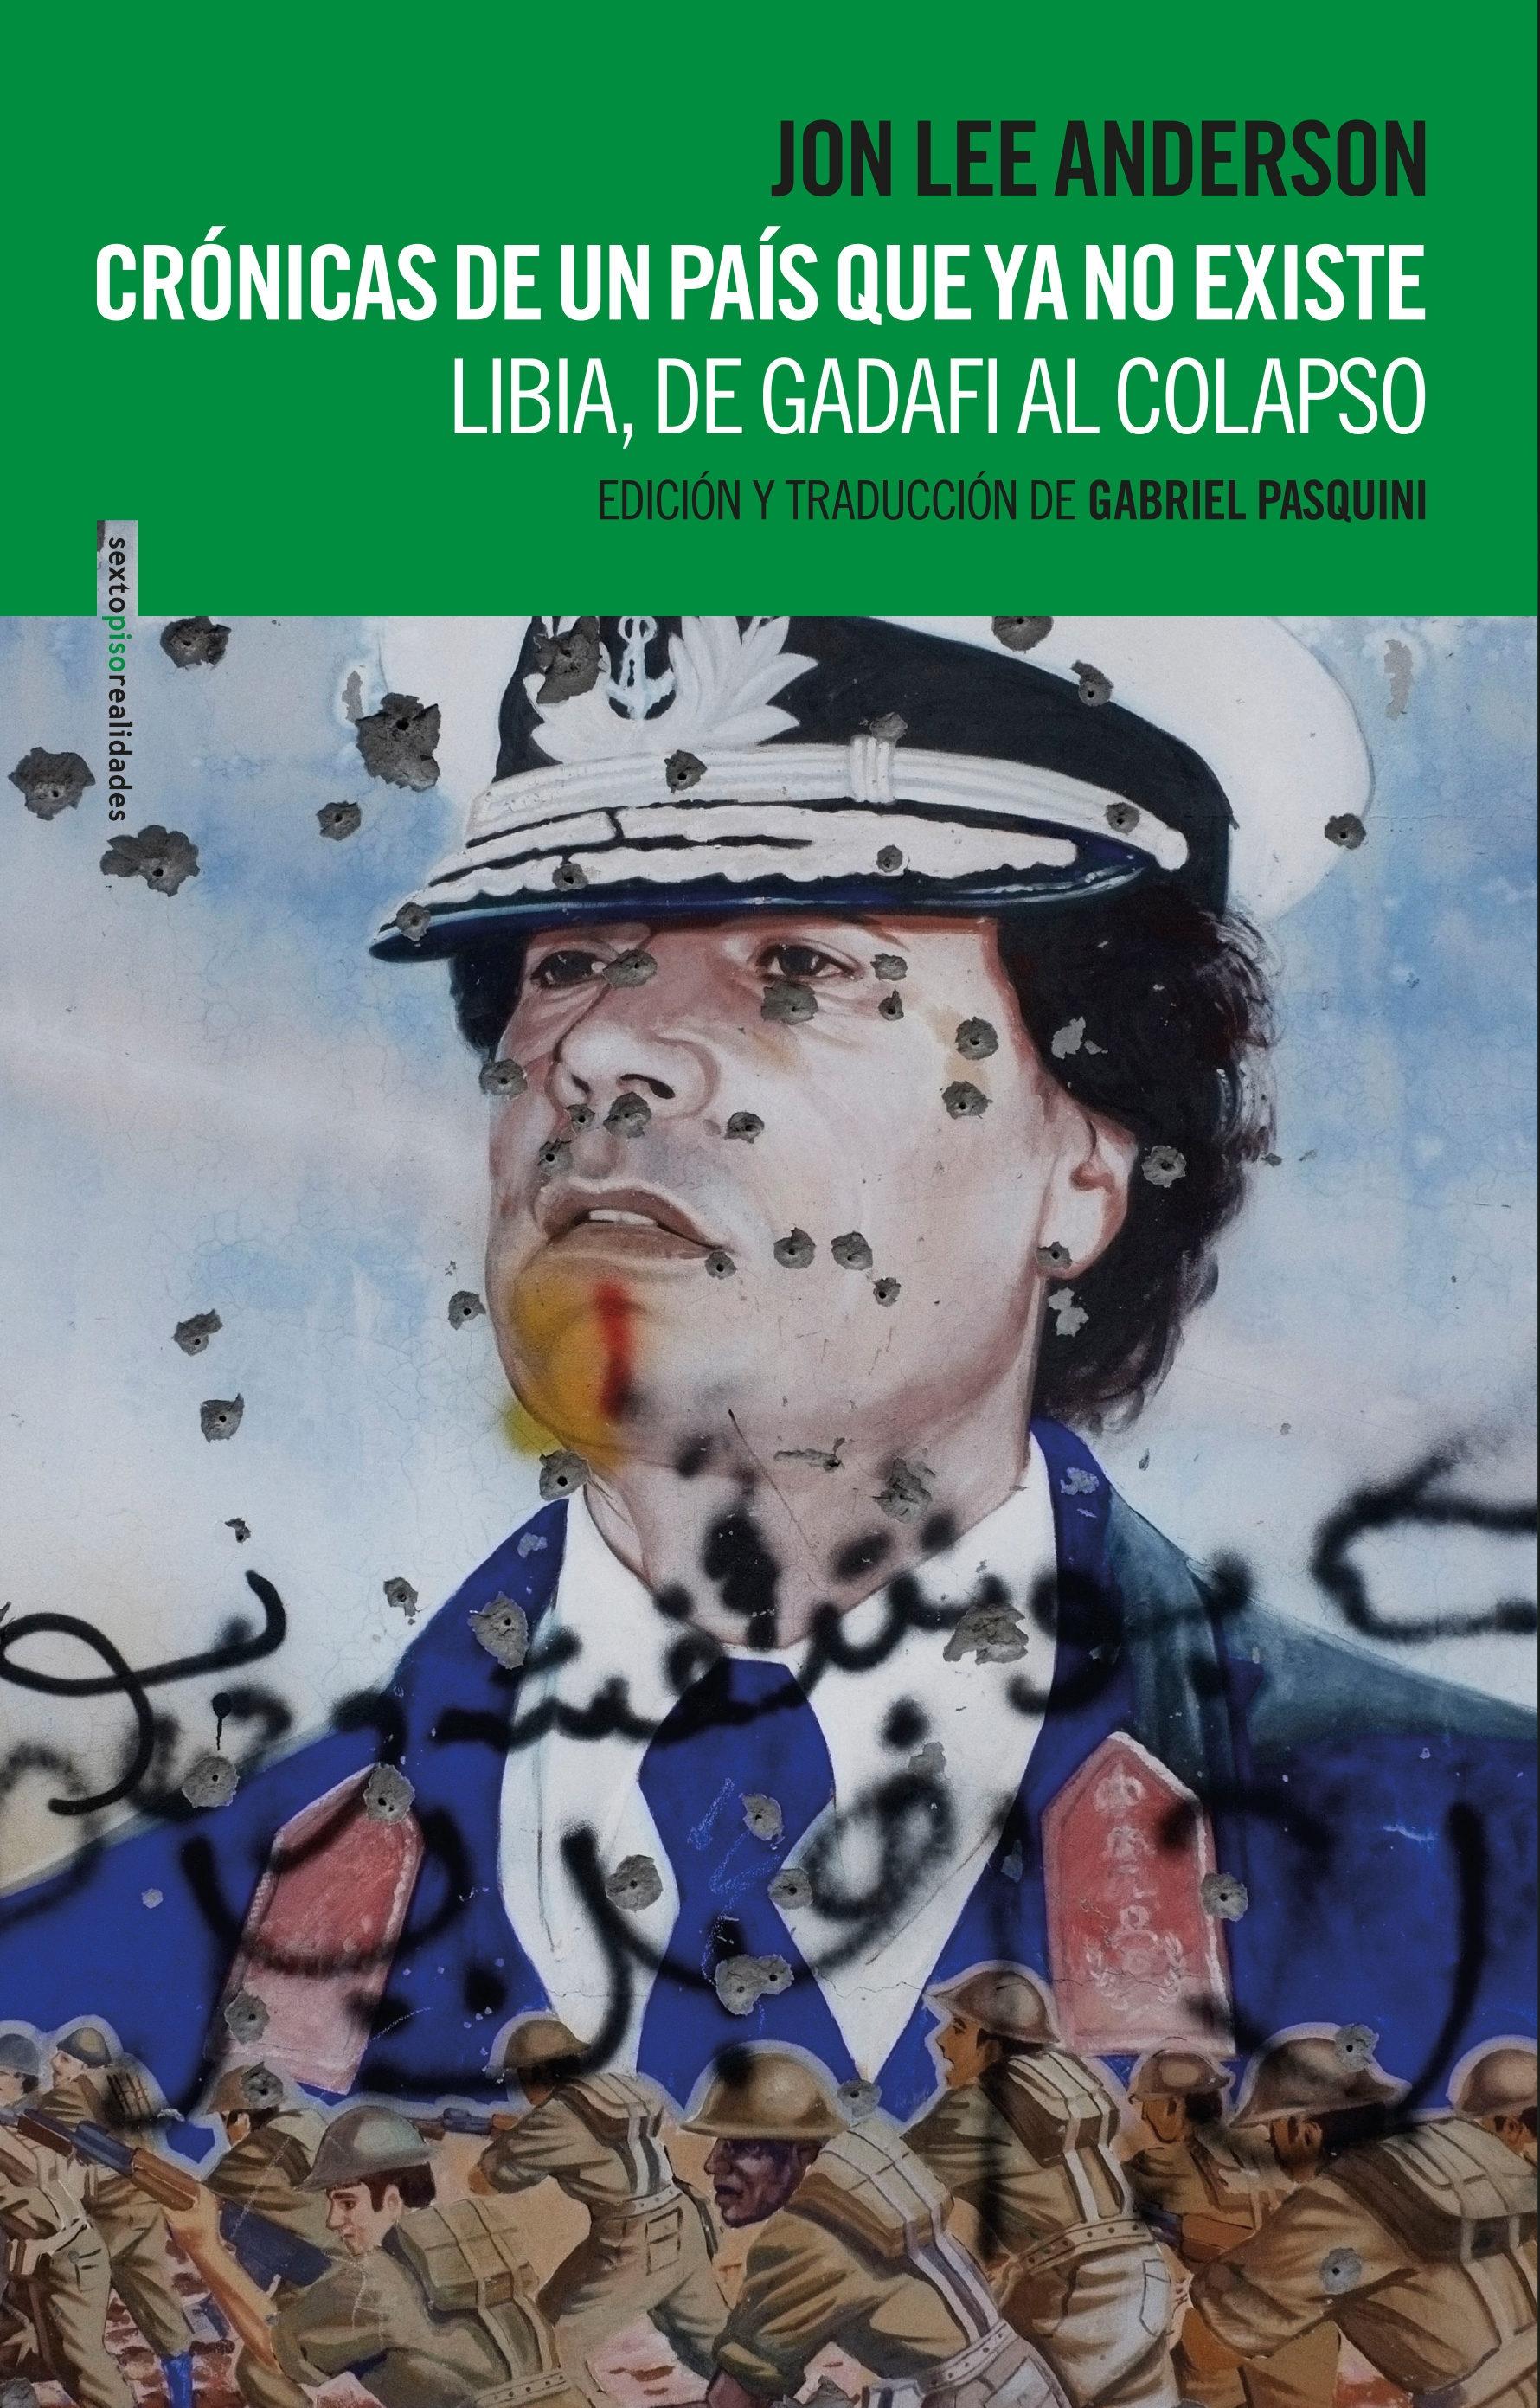 Crónicas de un país que ya no existe "Libia, de Gadafi al colapso". 